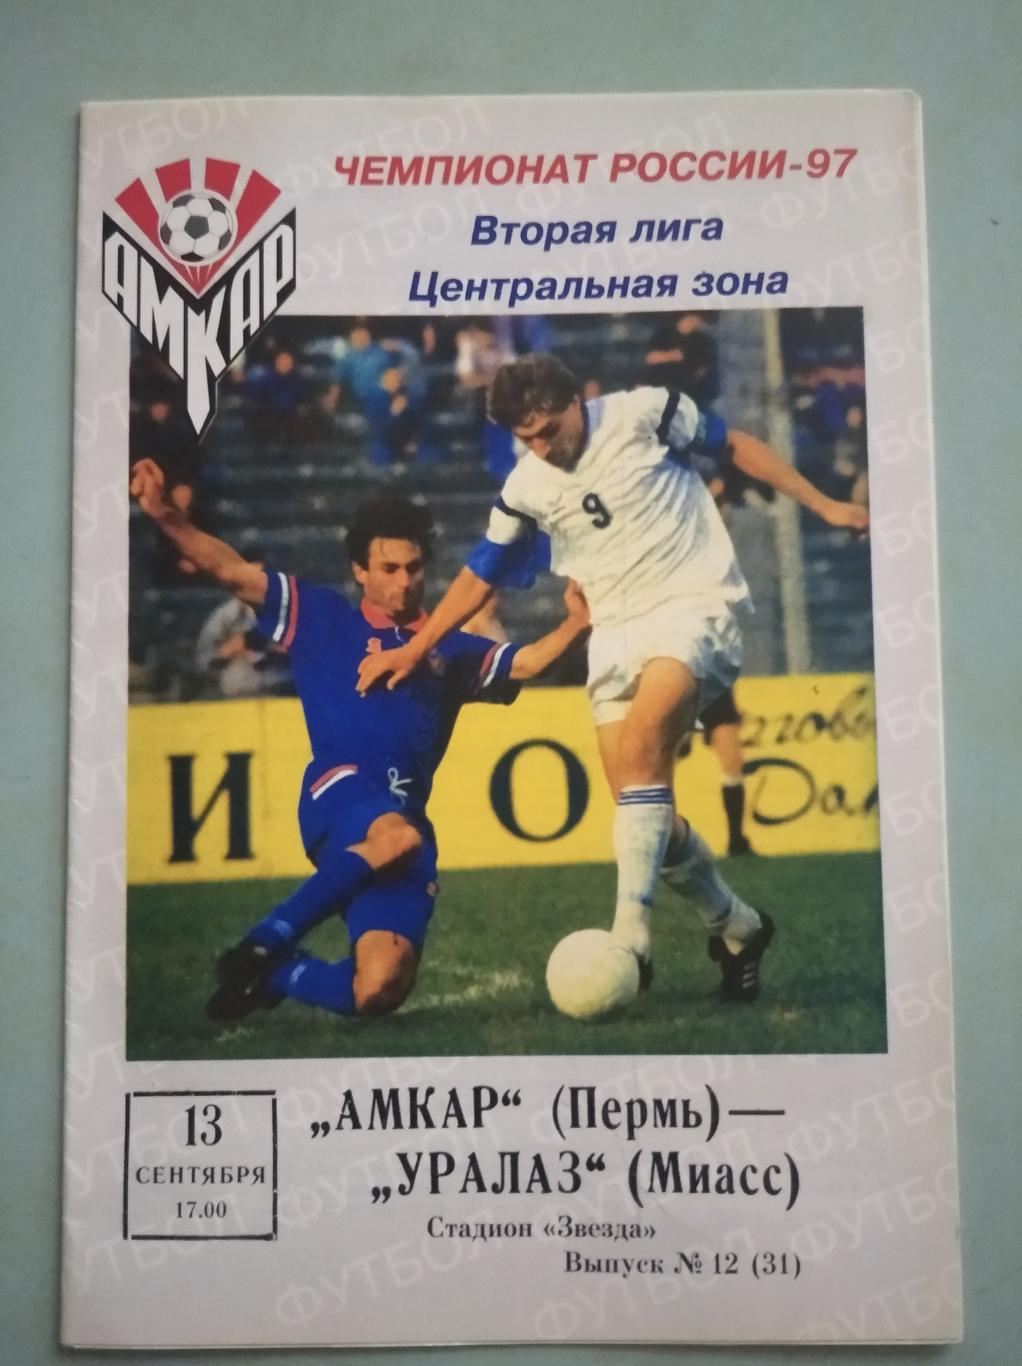 Амкар Пермь - УралАЗ Миасс. 13.09.1997